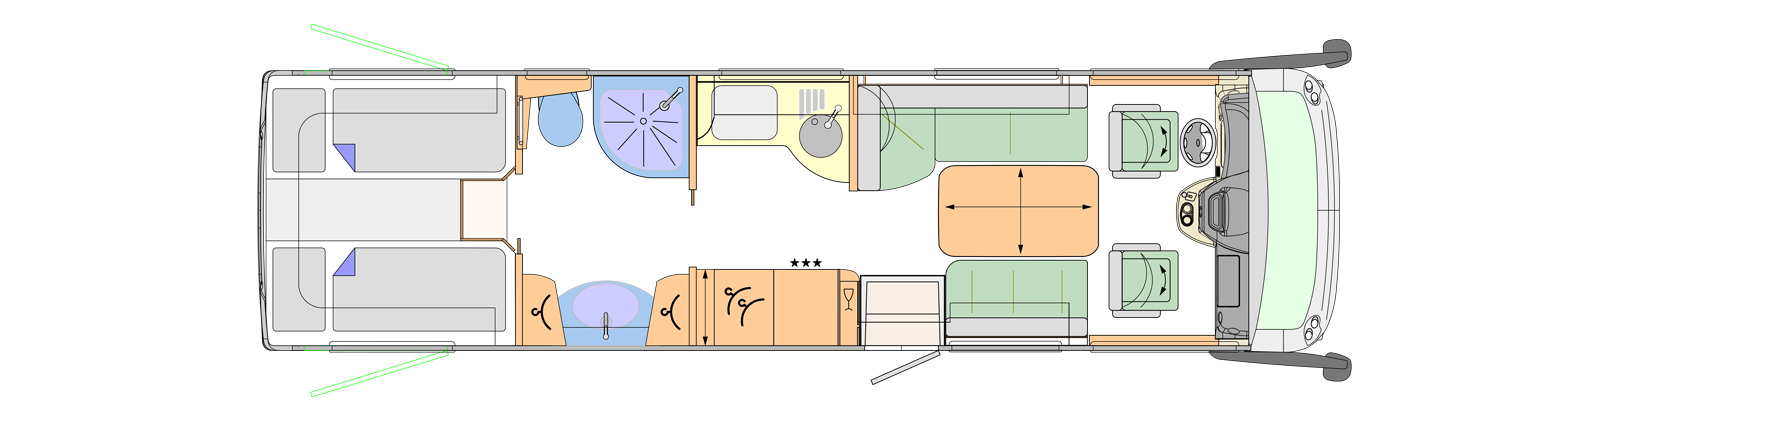 2019 Concorde Charisma 900L A-Class Motorhome Floorplan Layout